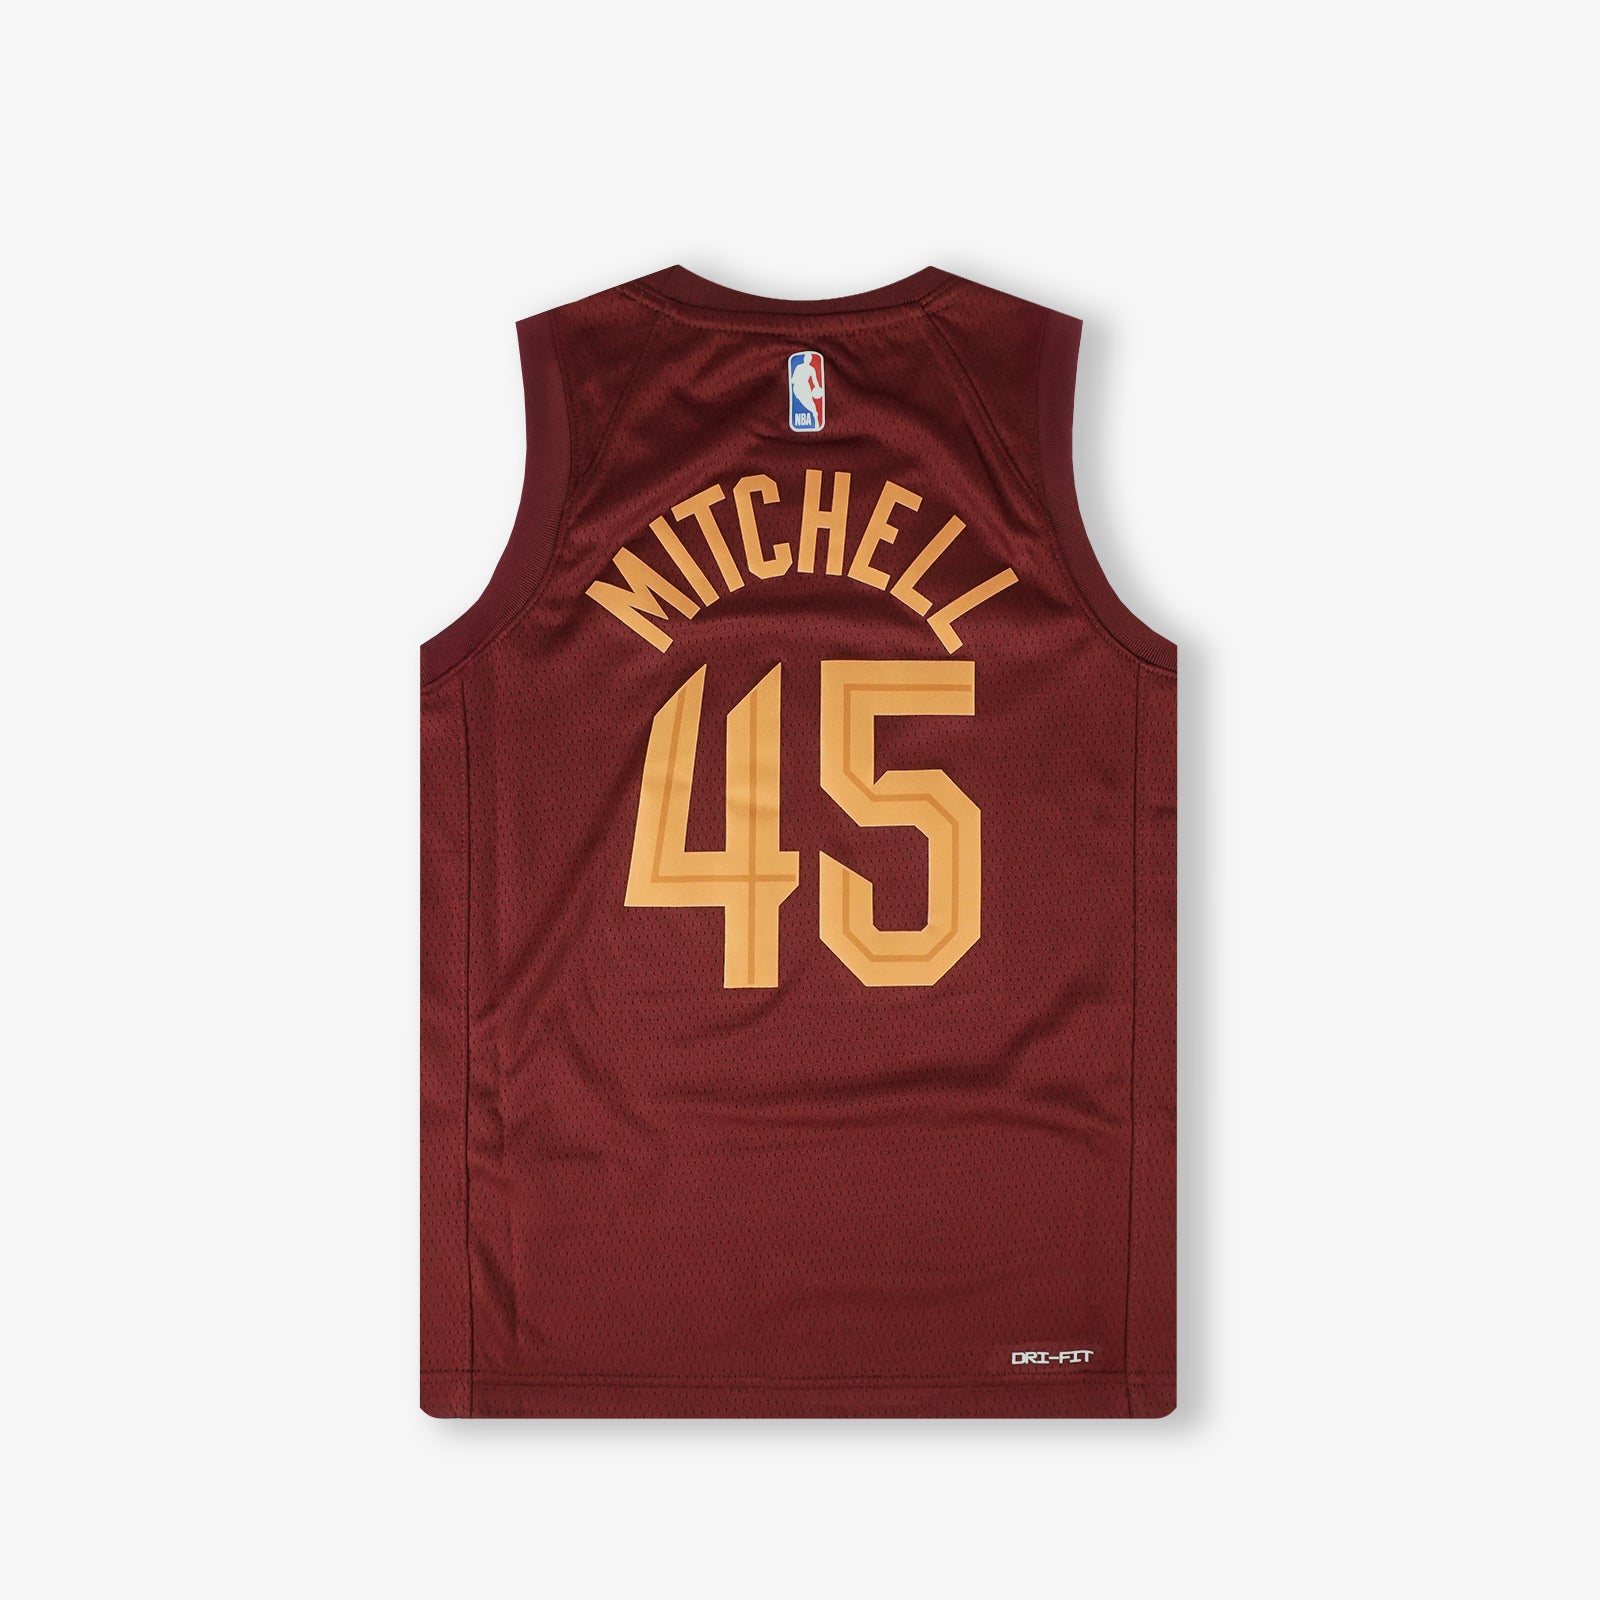 Nike Donovan Mitchell Association Swingman Jersey in White Size Large | Cavaliers